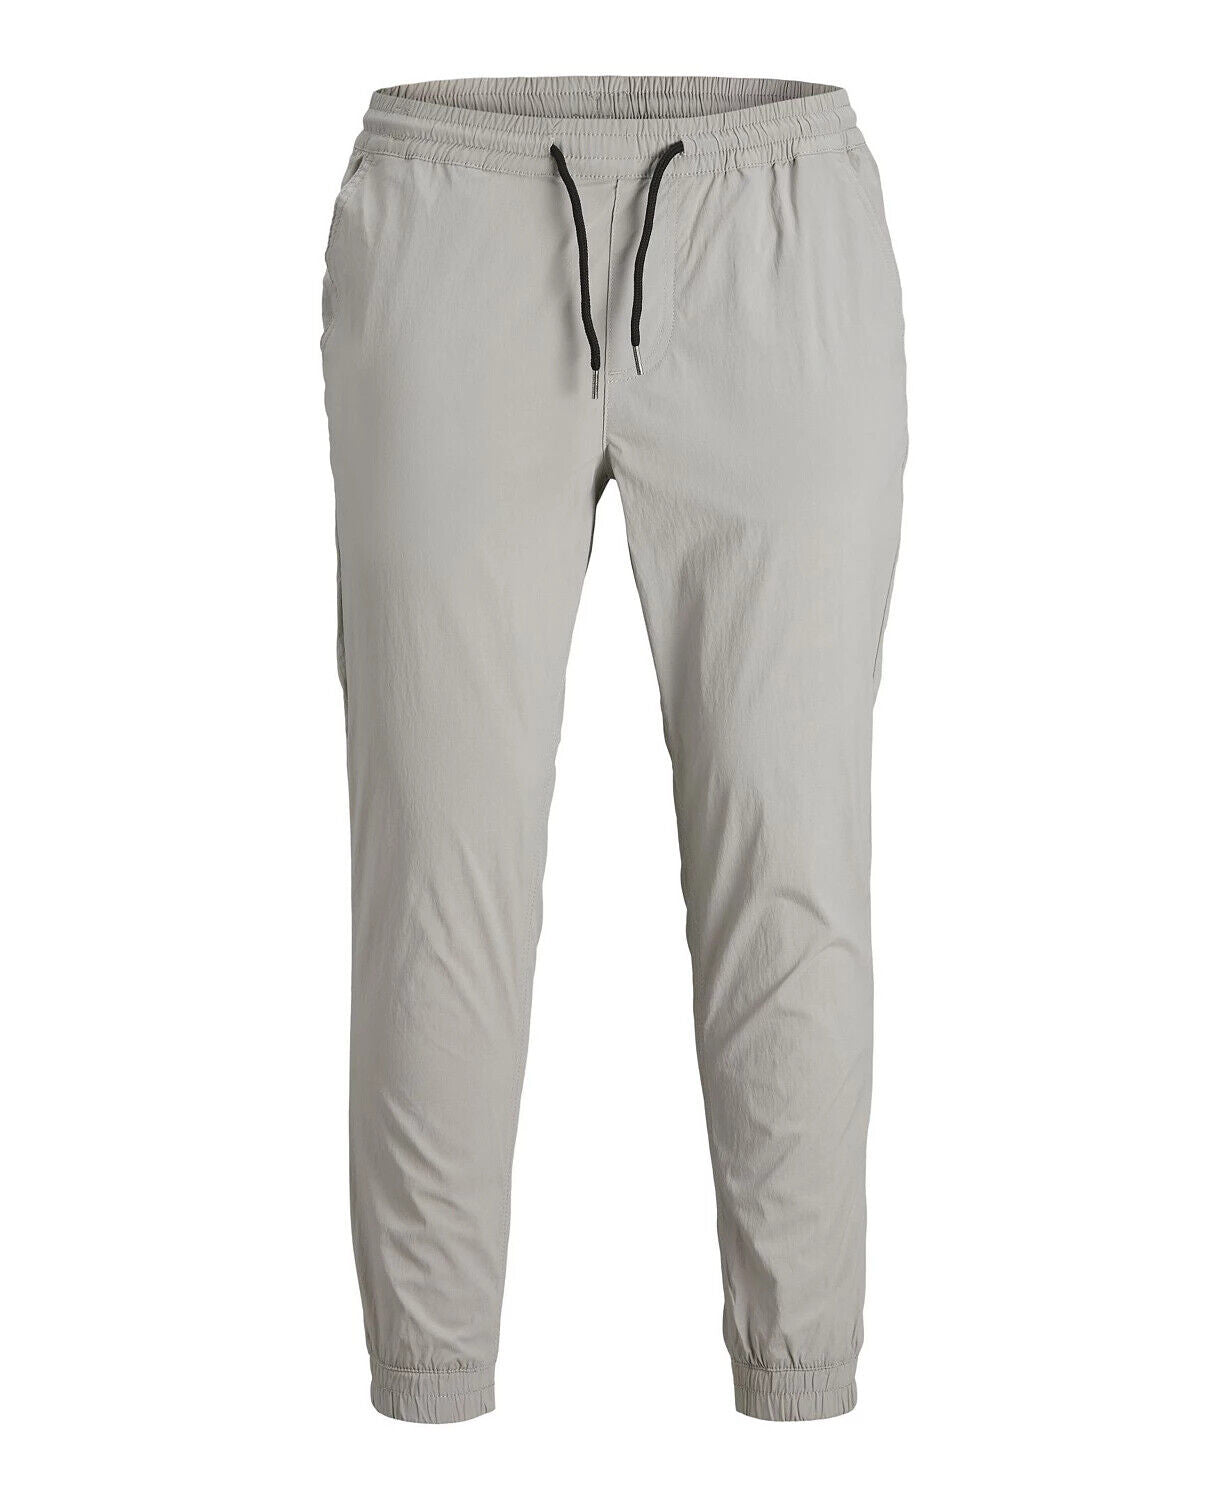 Jack & Jones Gordon Slim Cuffed Tech Pants MSRP $69 Size XXL # TR 907 NEW